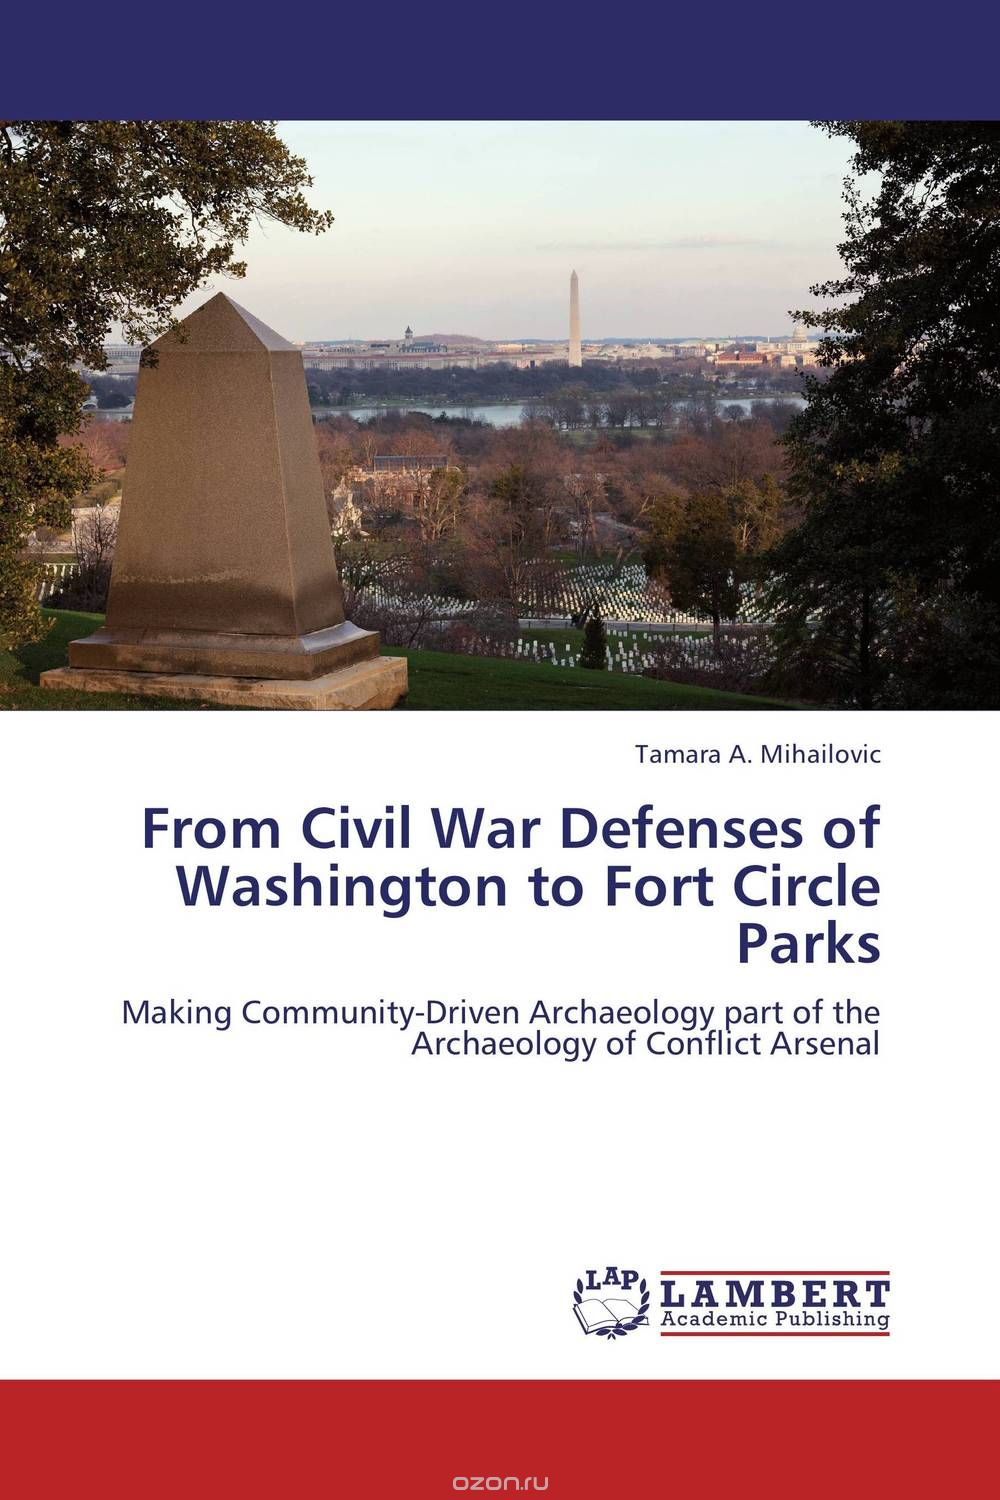 Скачать книгу "From Civil War Defenses of Washington to Fort Circle Parks"